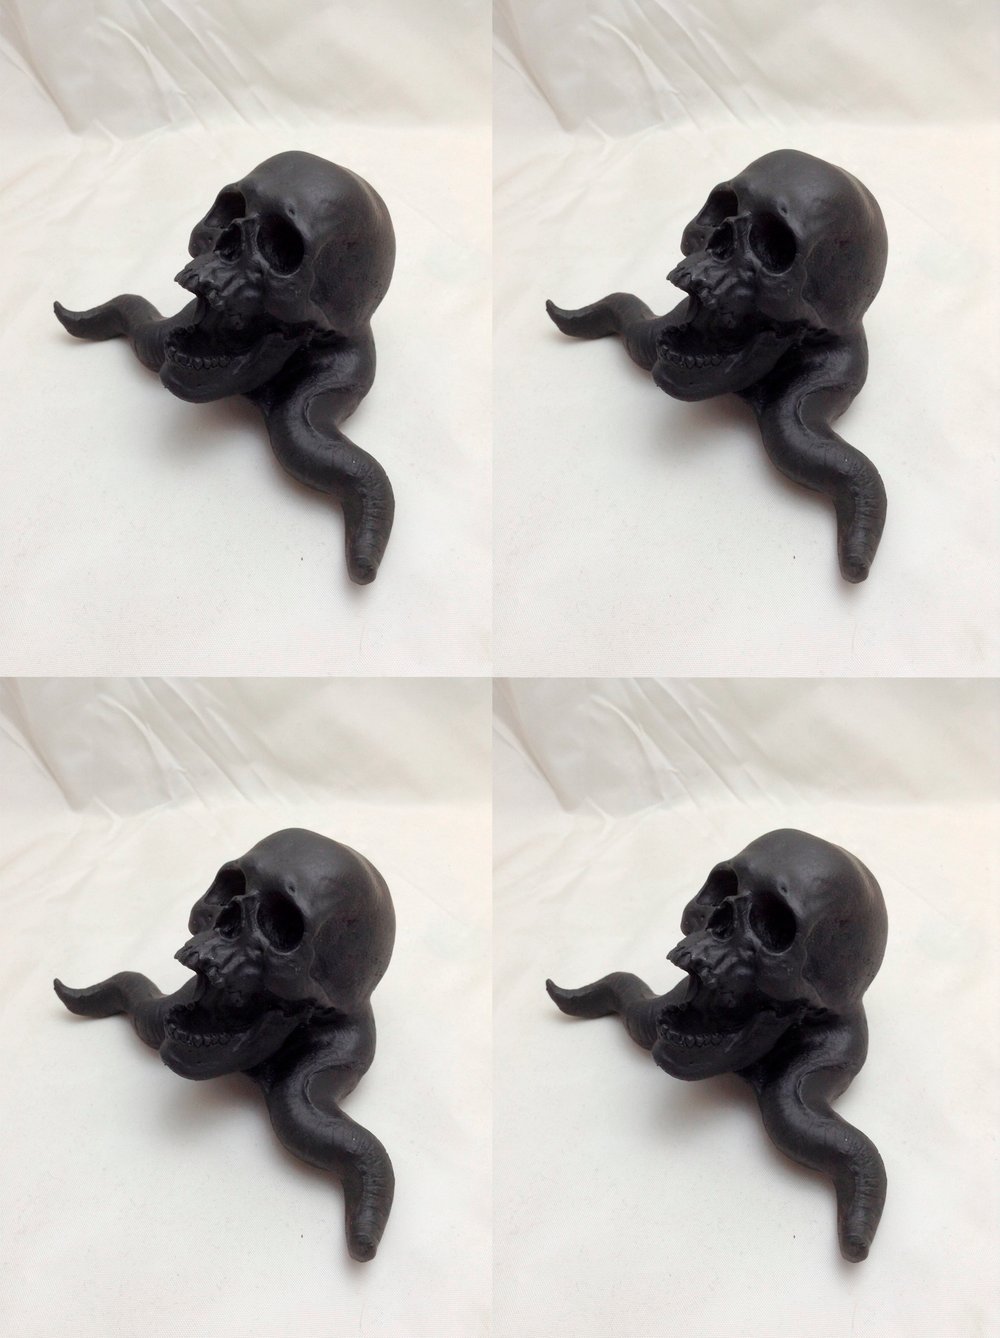 Tentacle Skull set of 4